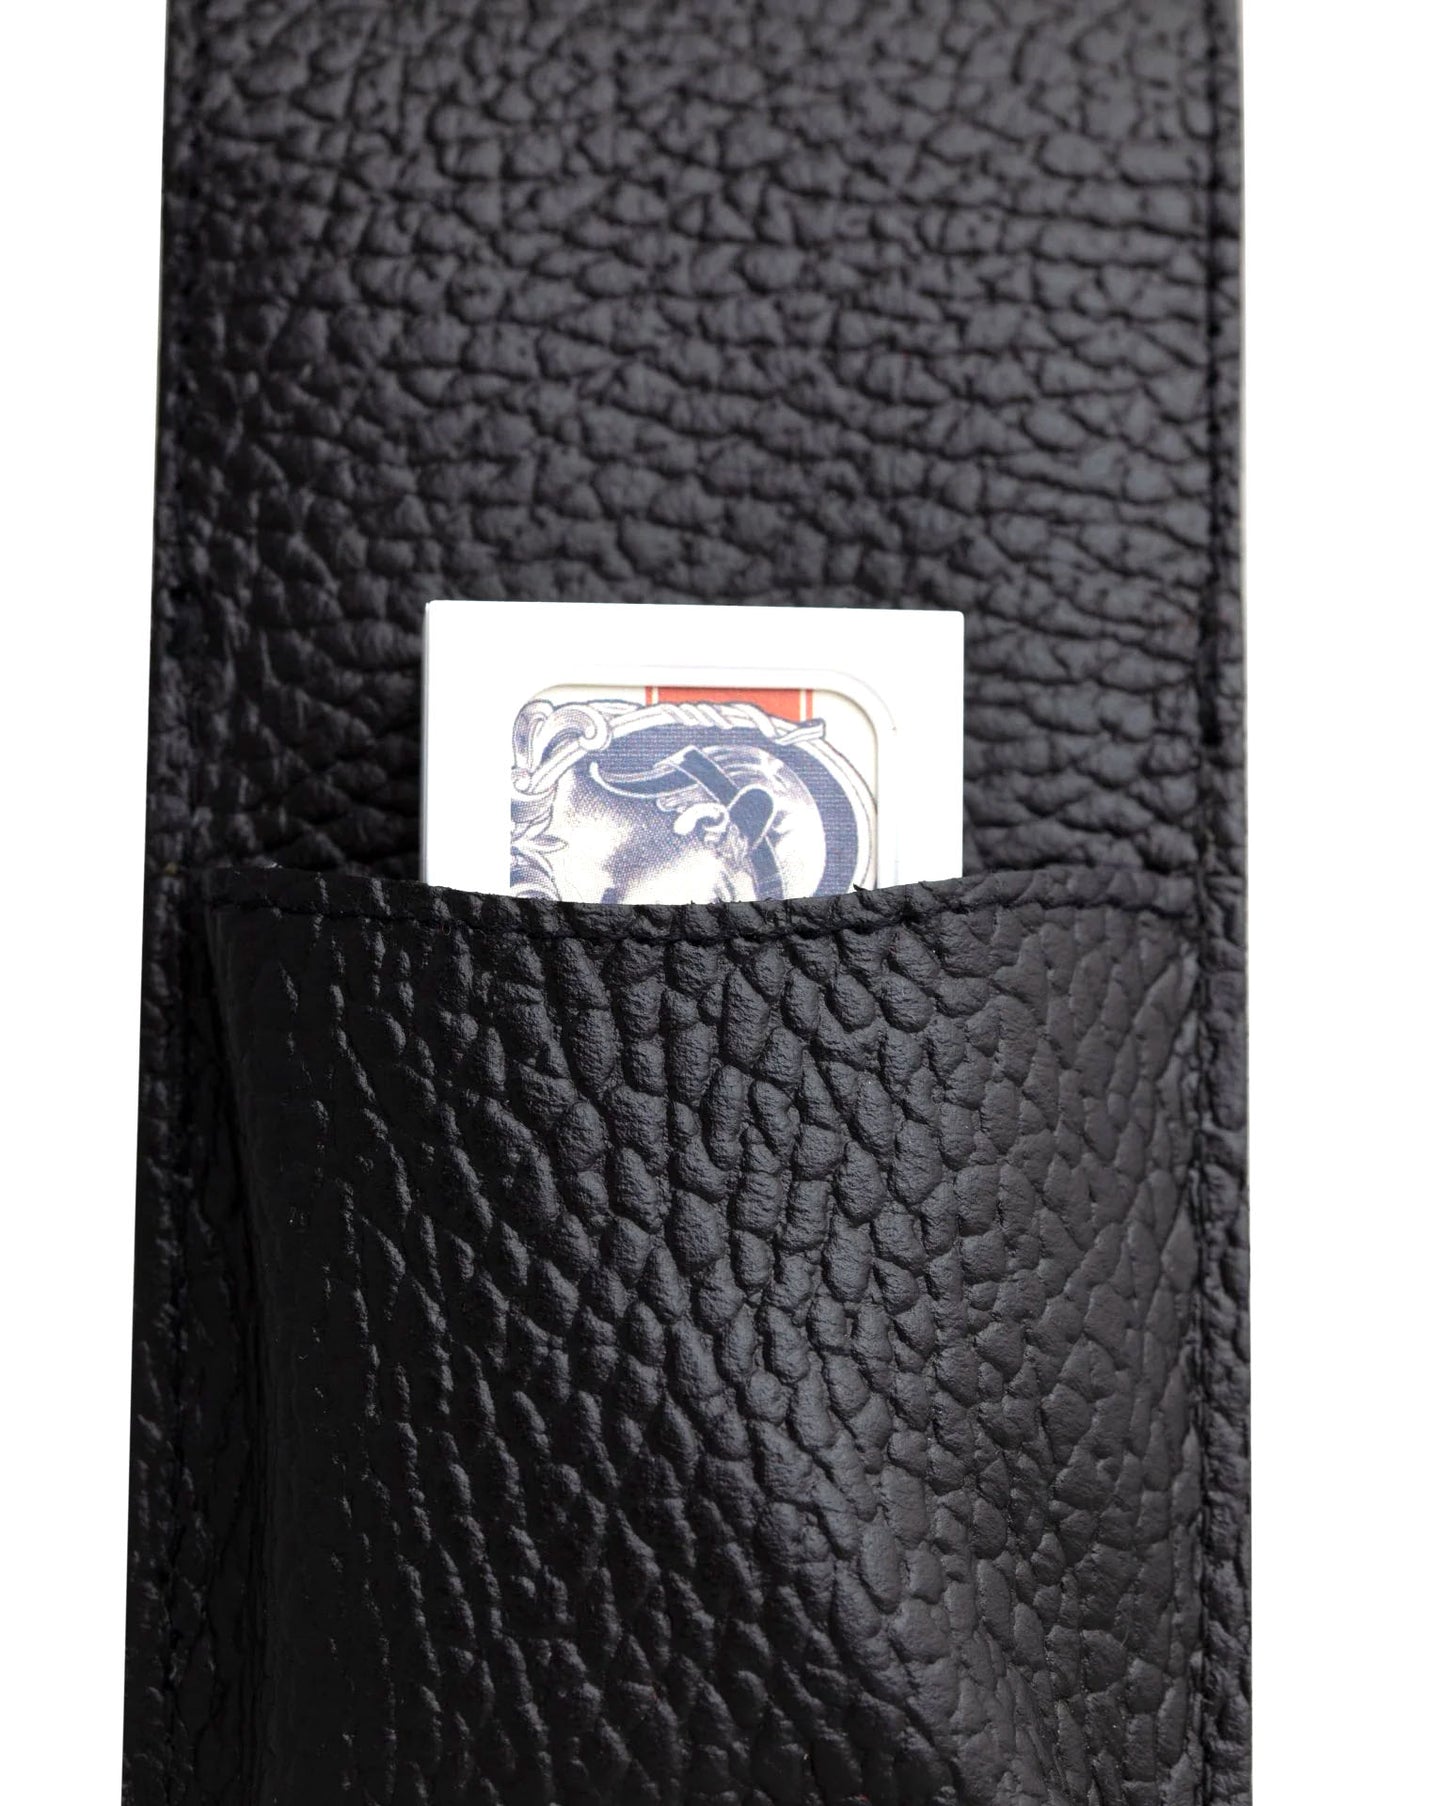 Giesen & Forsthoff Timor® Leather Case For Safety Razor, Black Leather